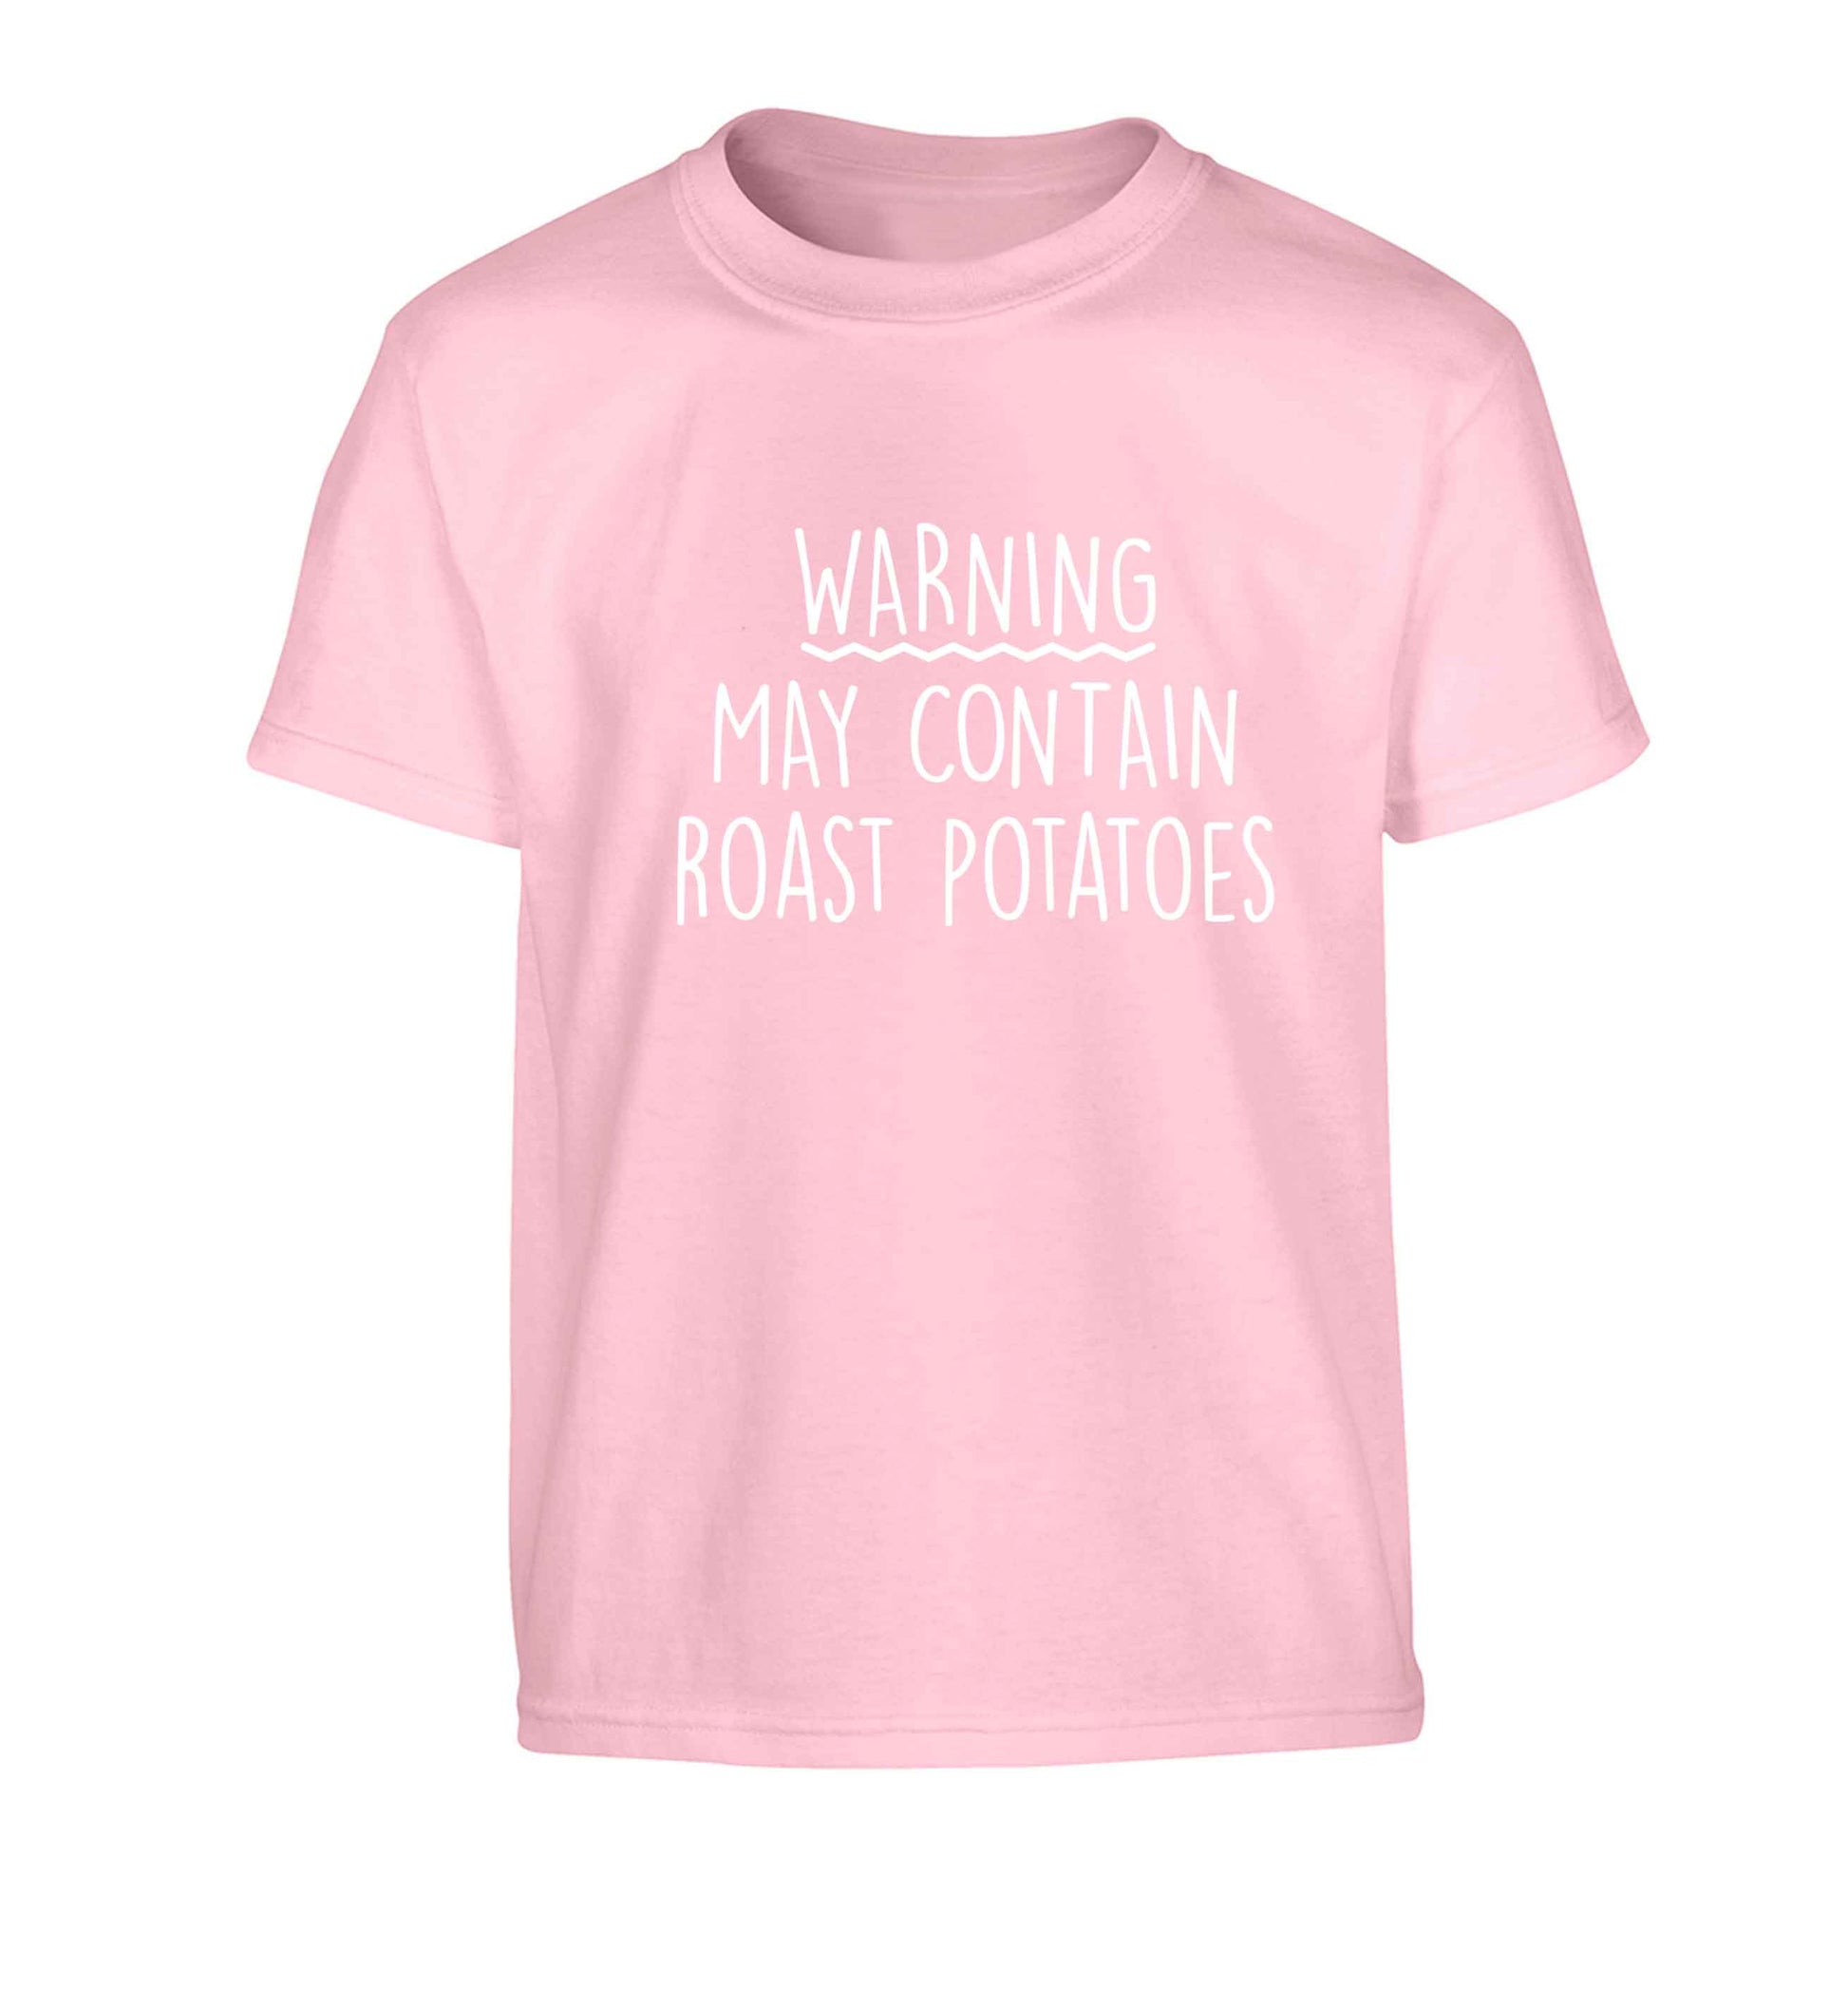 Warning may containg roast potatoes Children's light pink Tshirt 12-13 Years